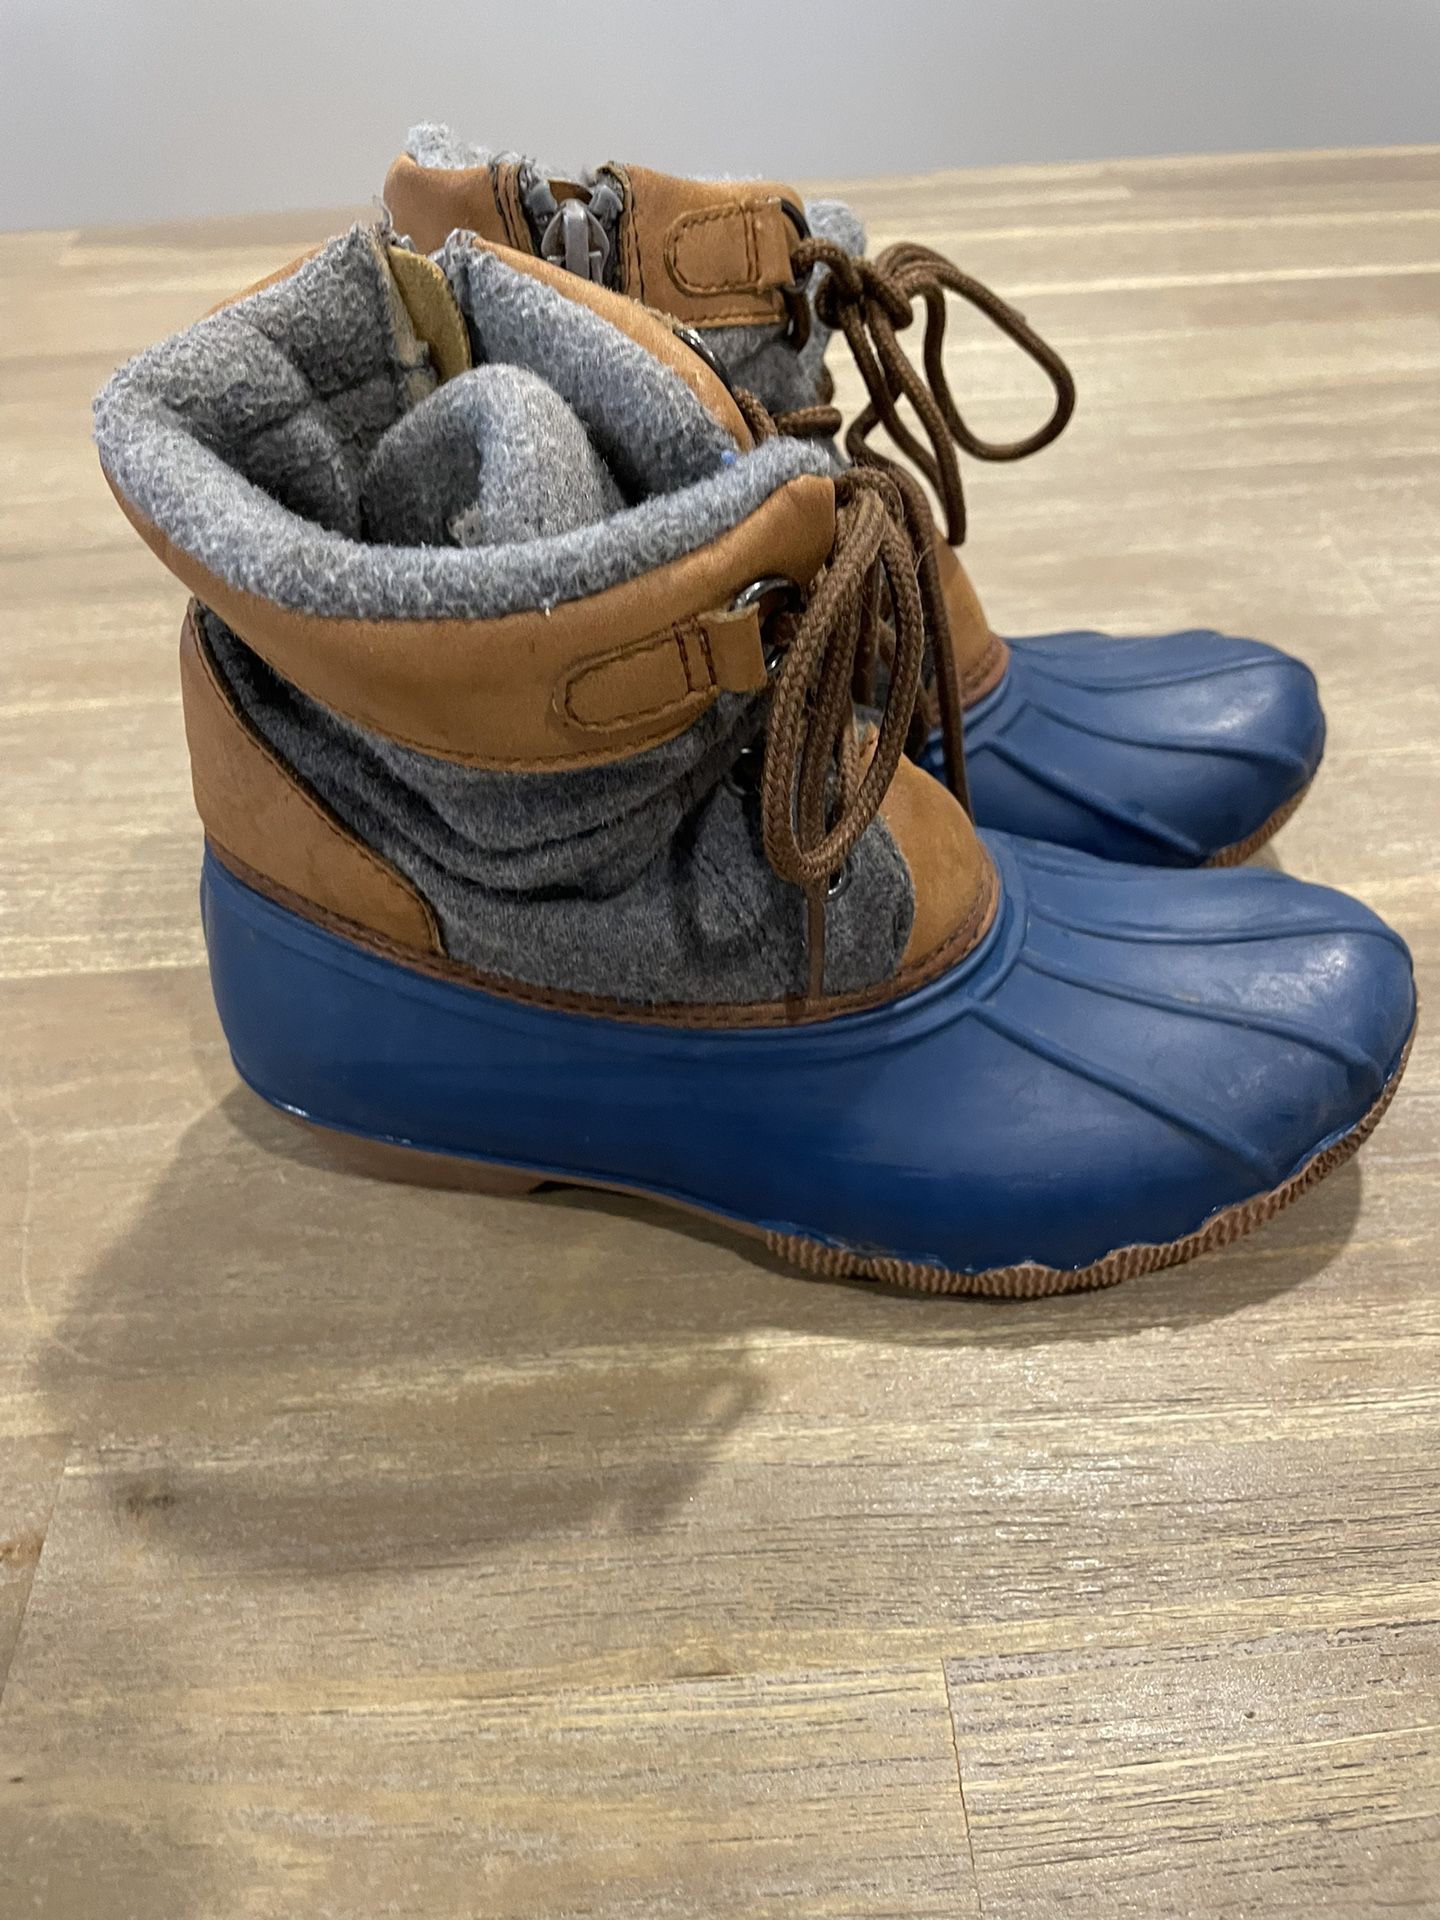 Boys Snow Boots- Size 2 